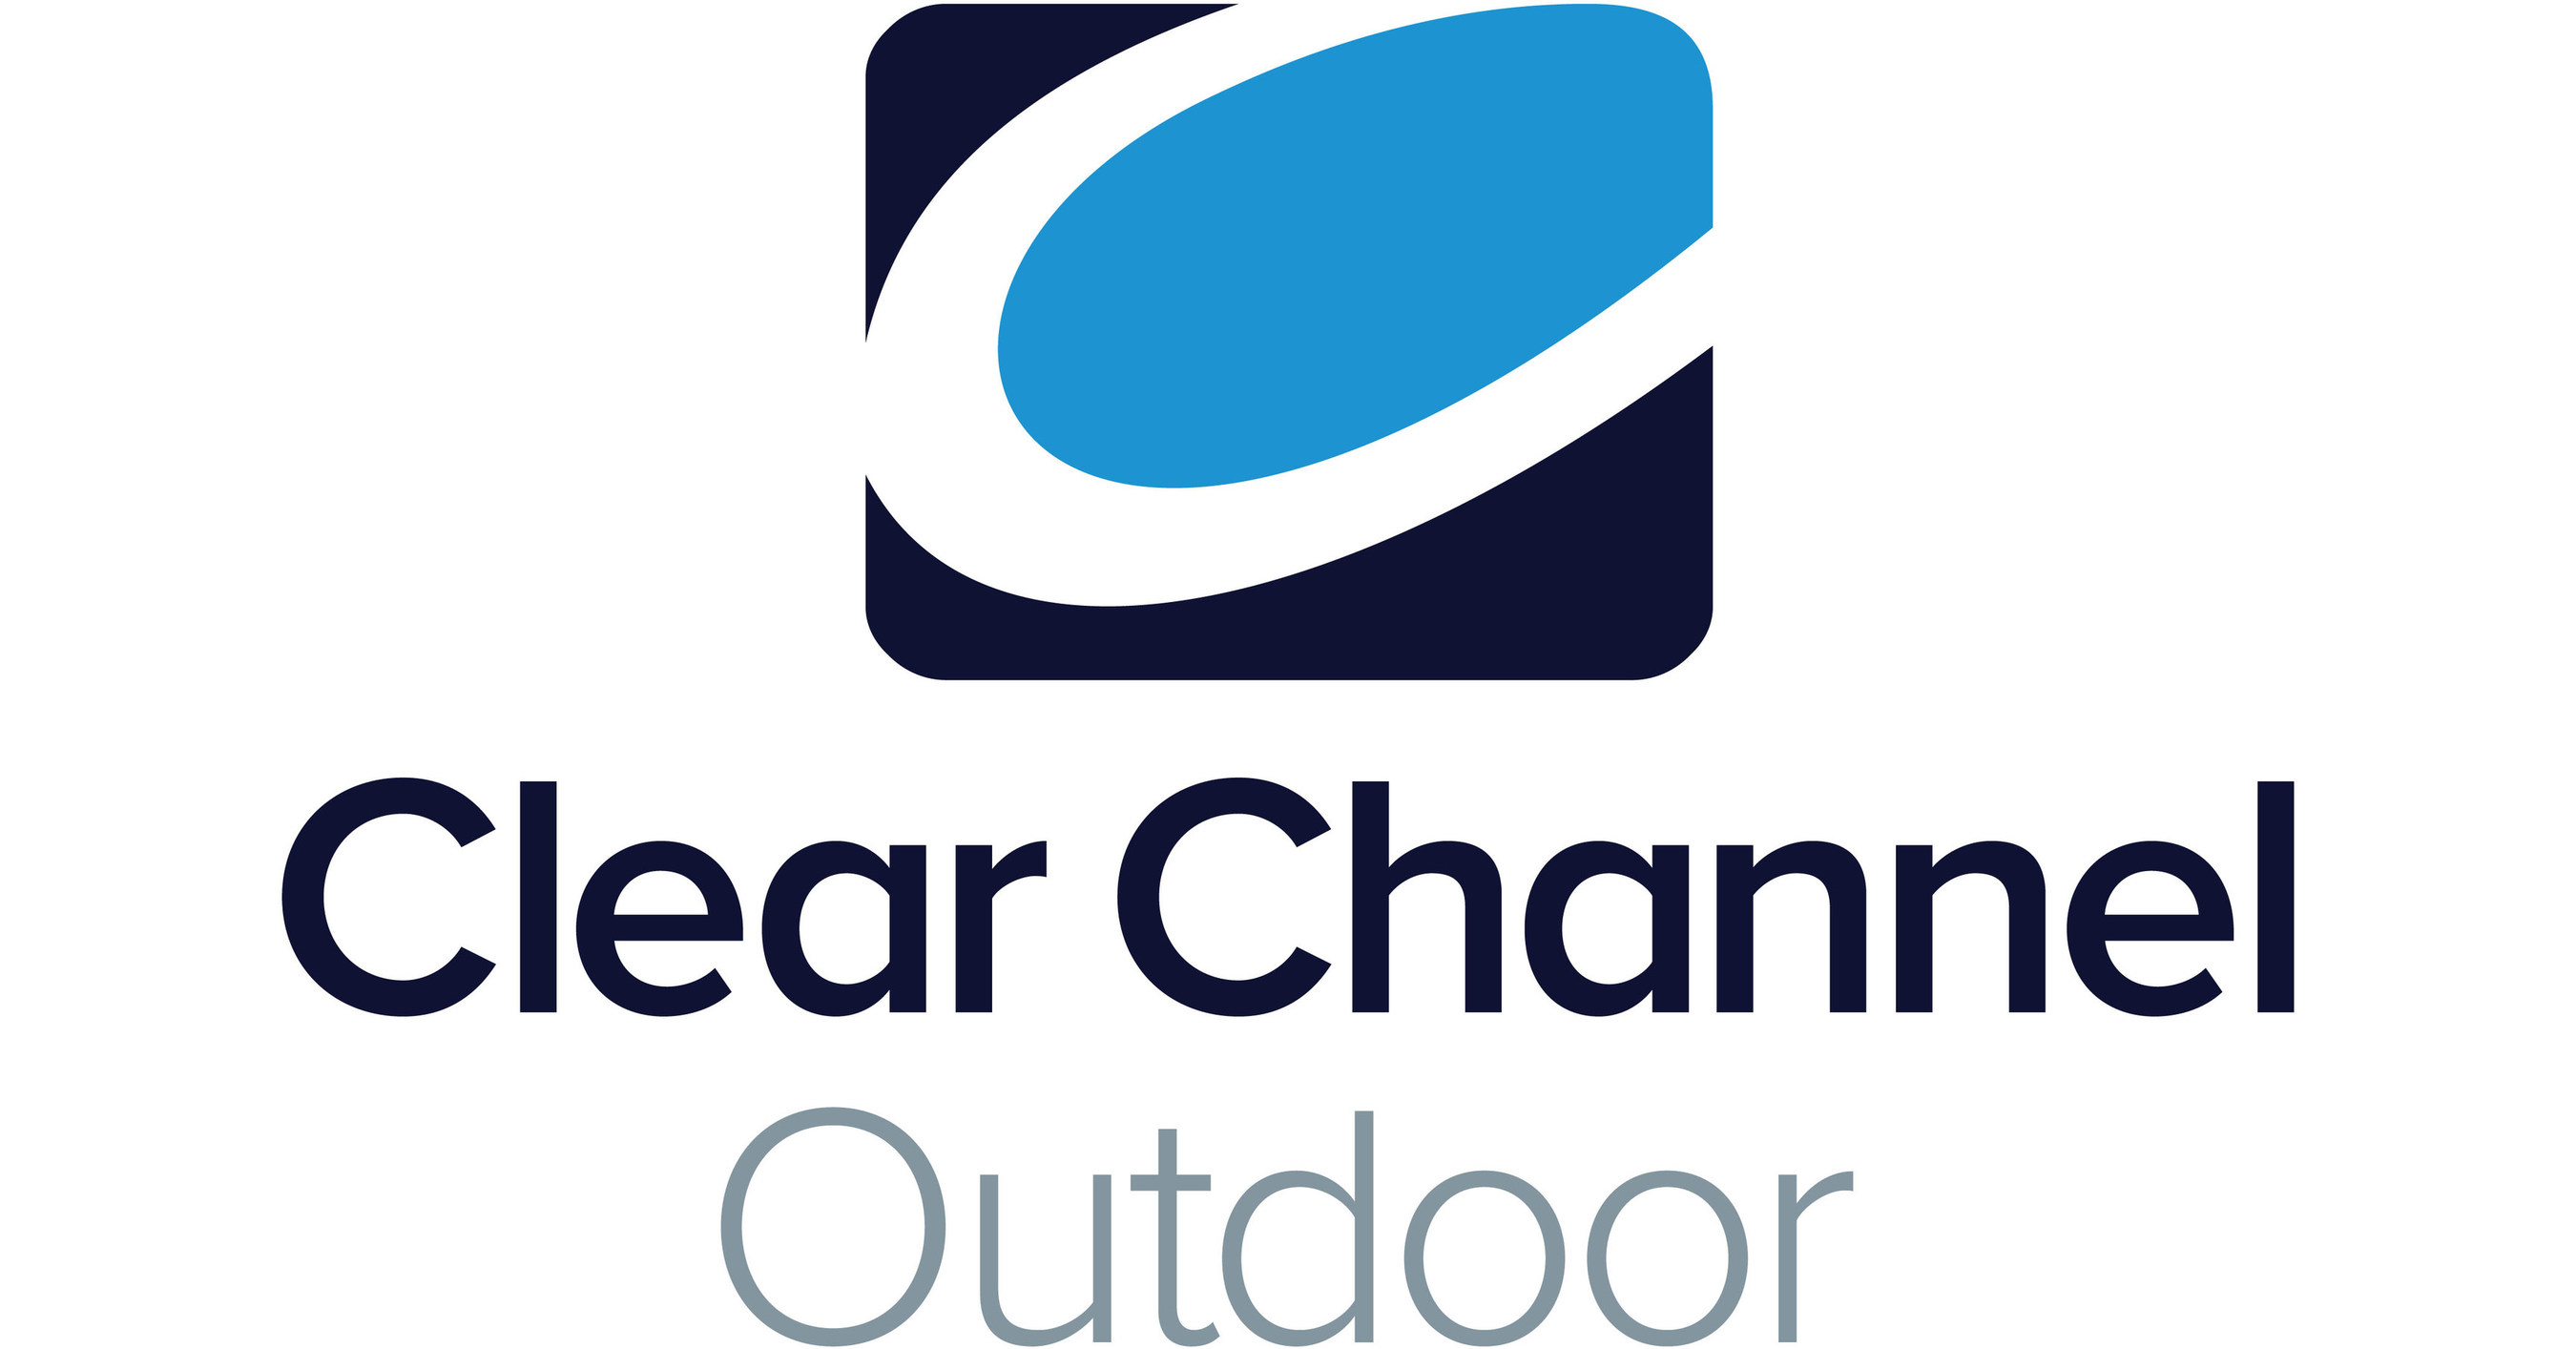 Clear Channel Outdoor Logo jpg?p=facebook.